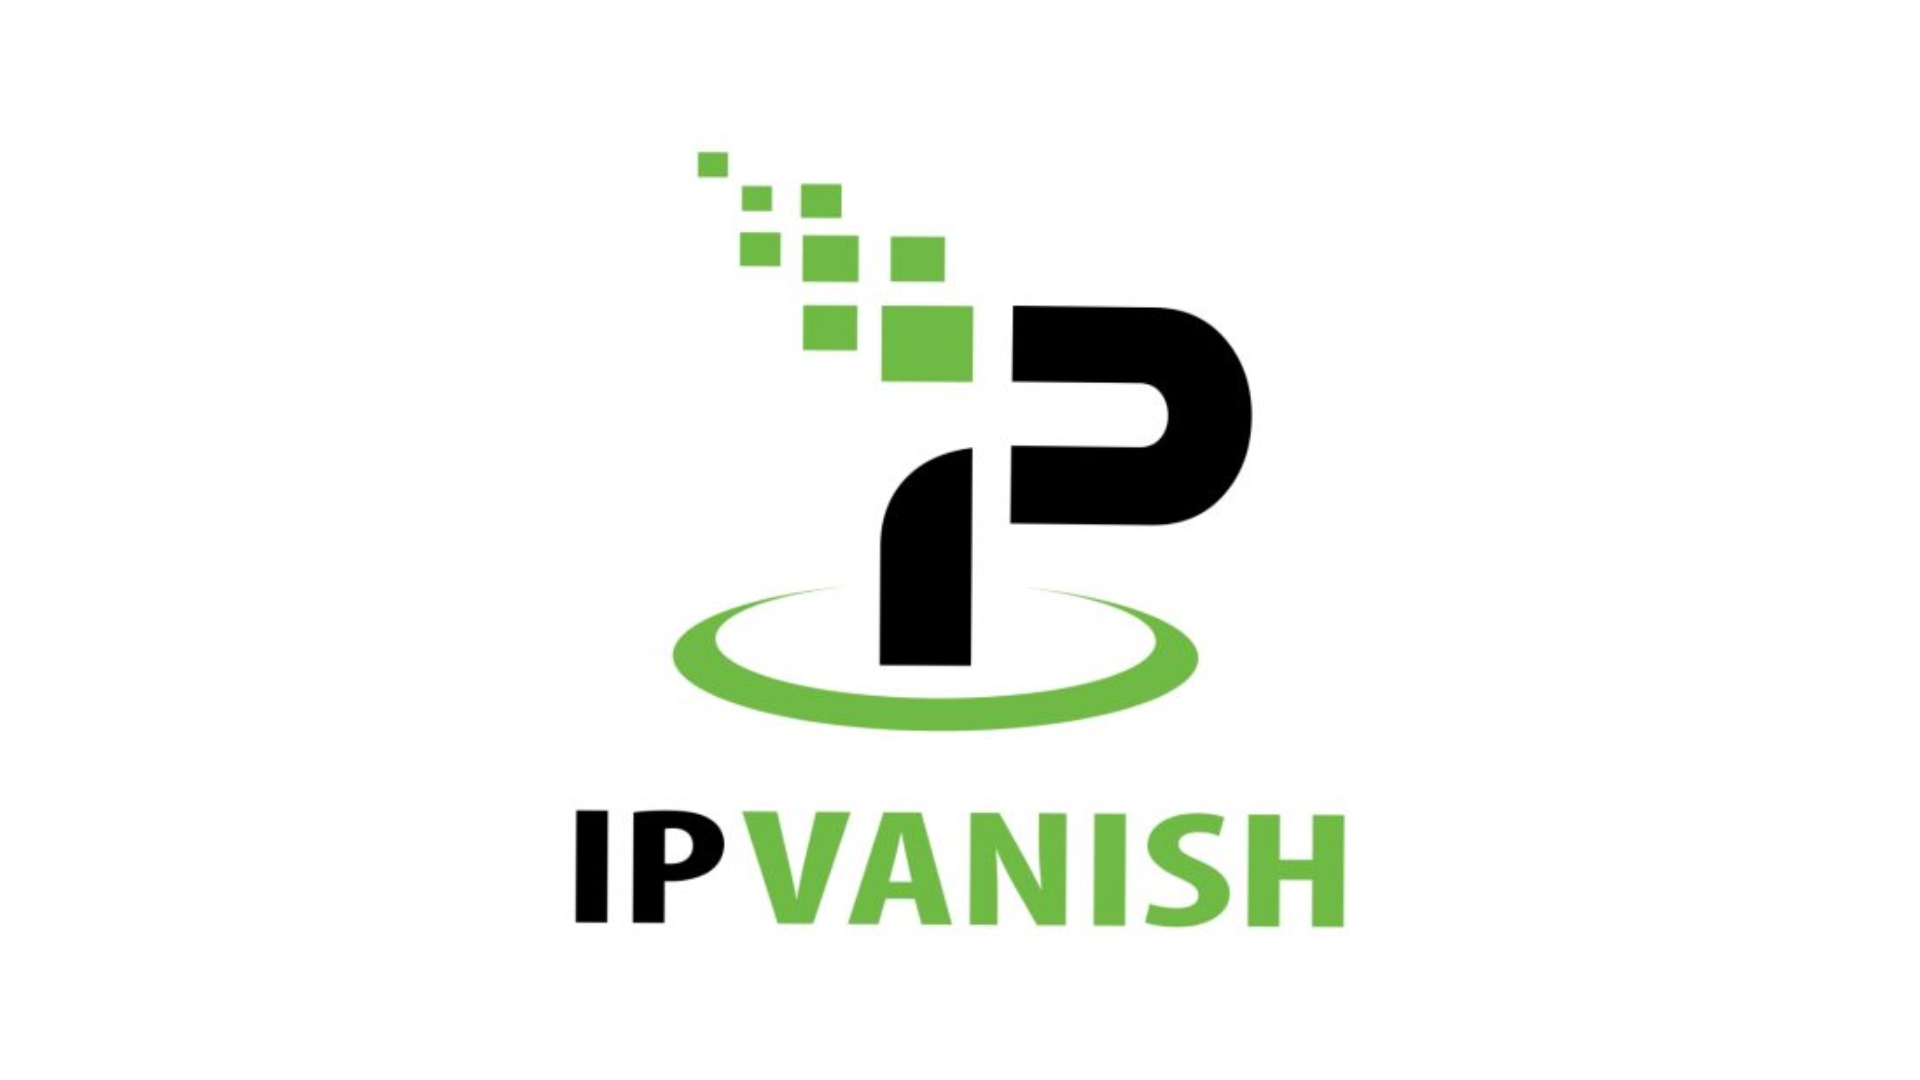 VPN costs for IPVanish. Image shows the company logo.